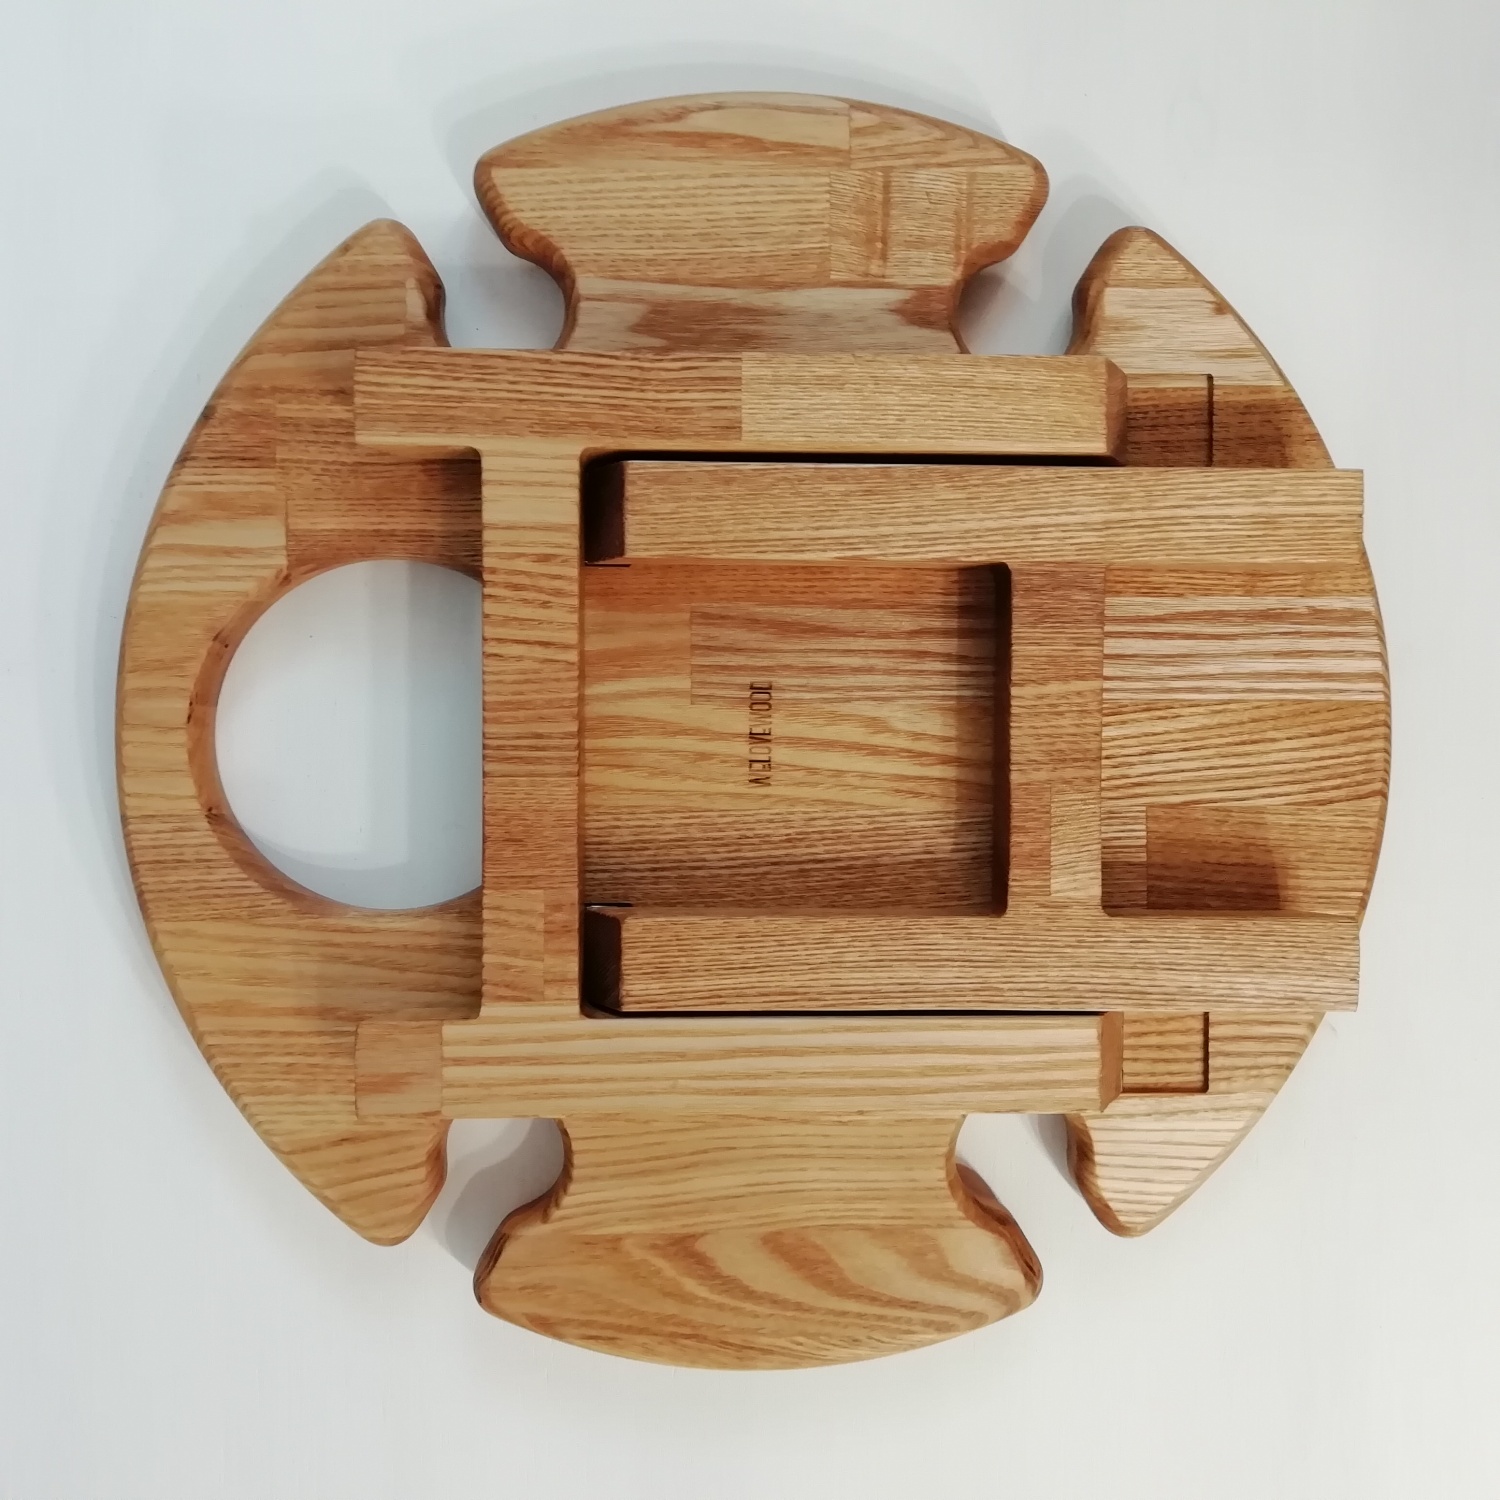 Creed wood винный столик